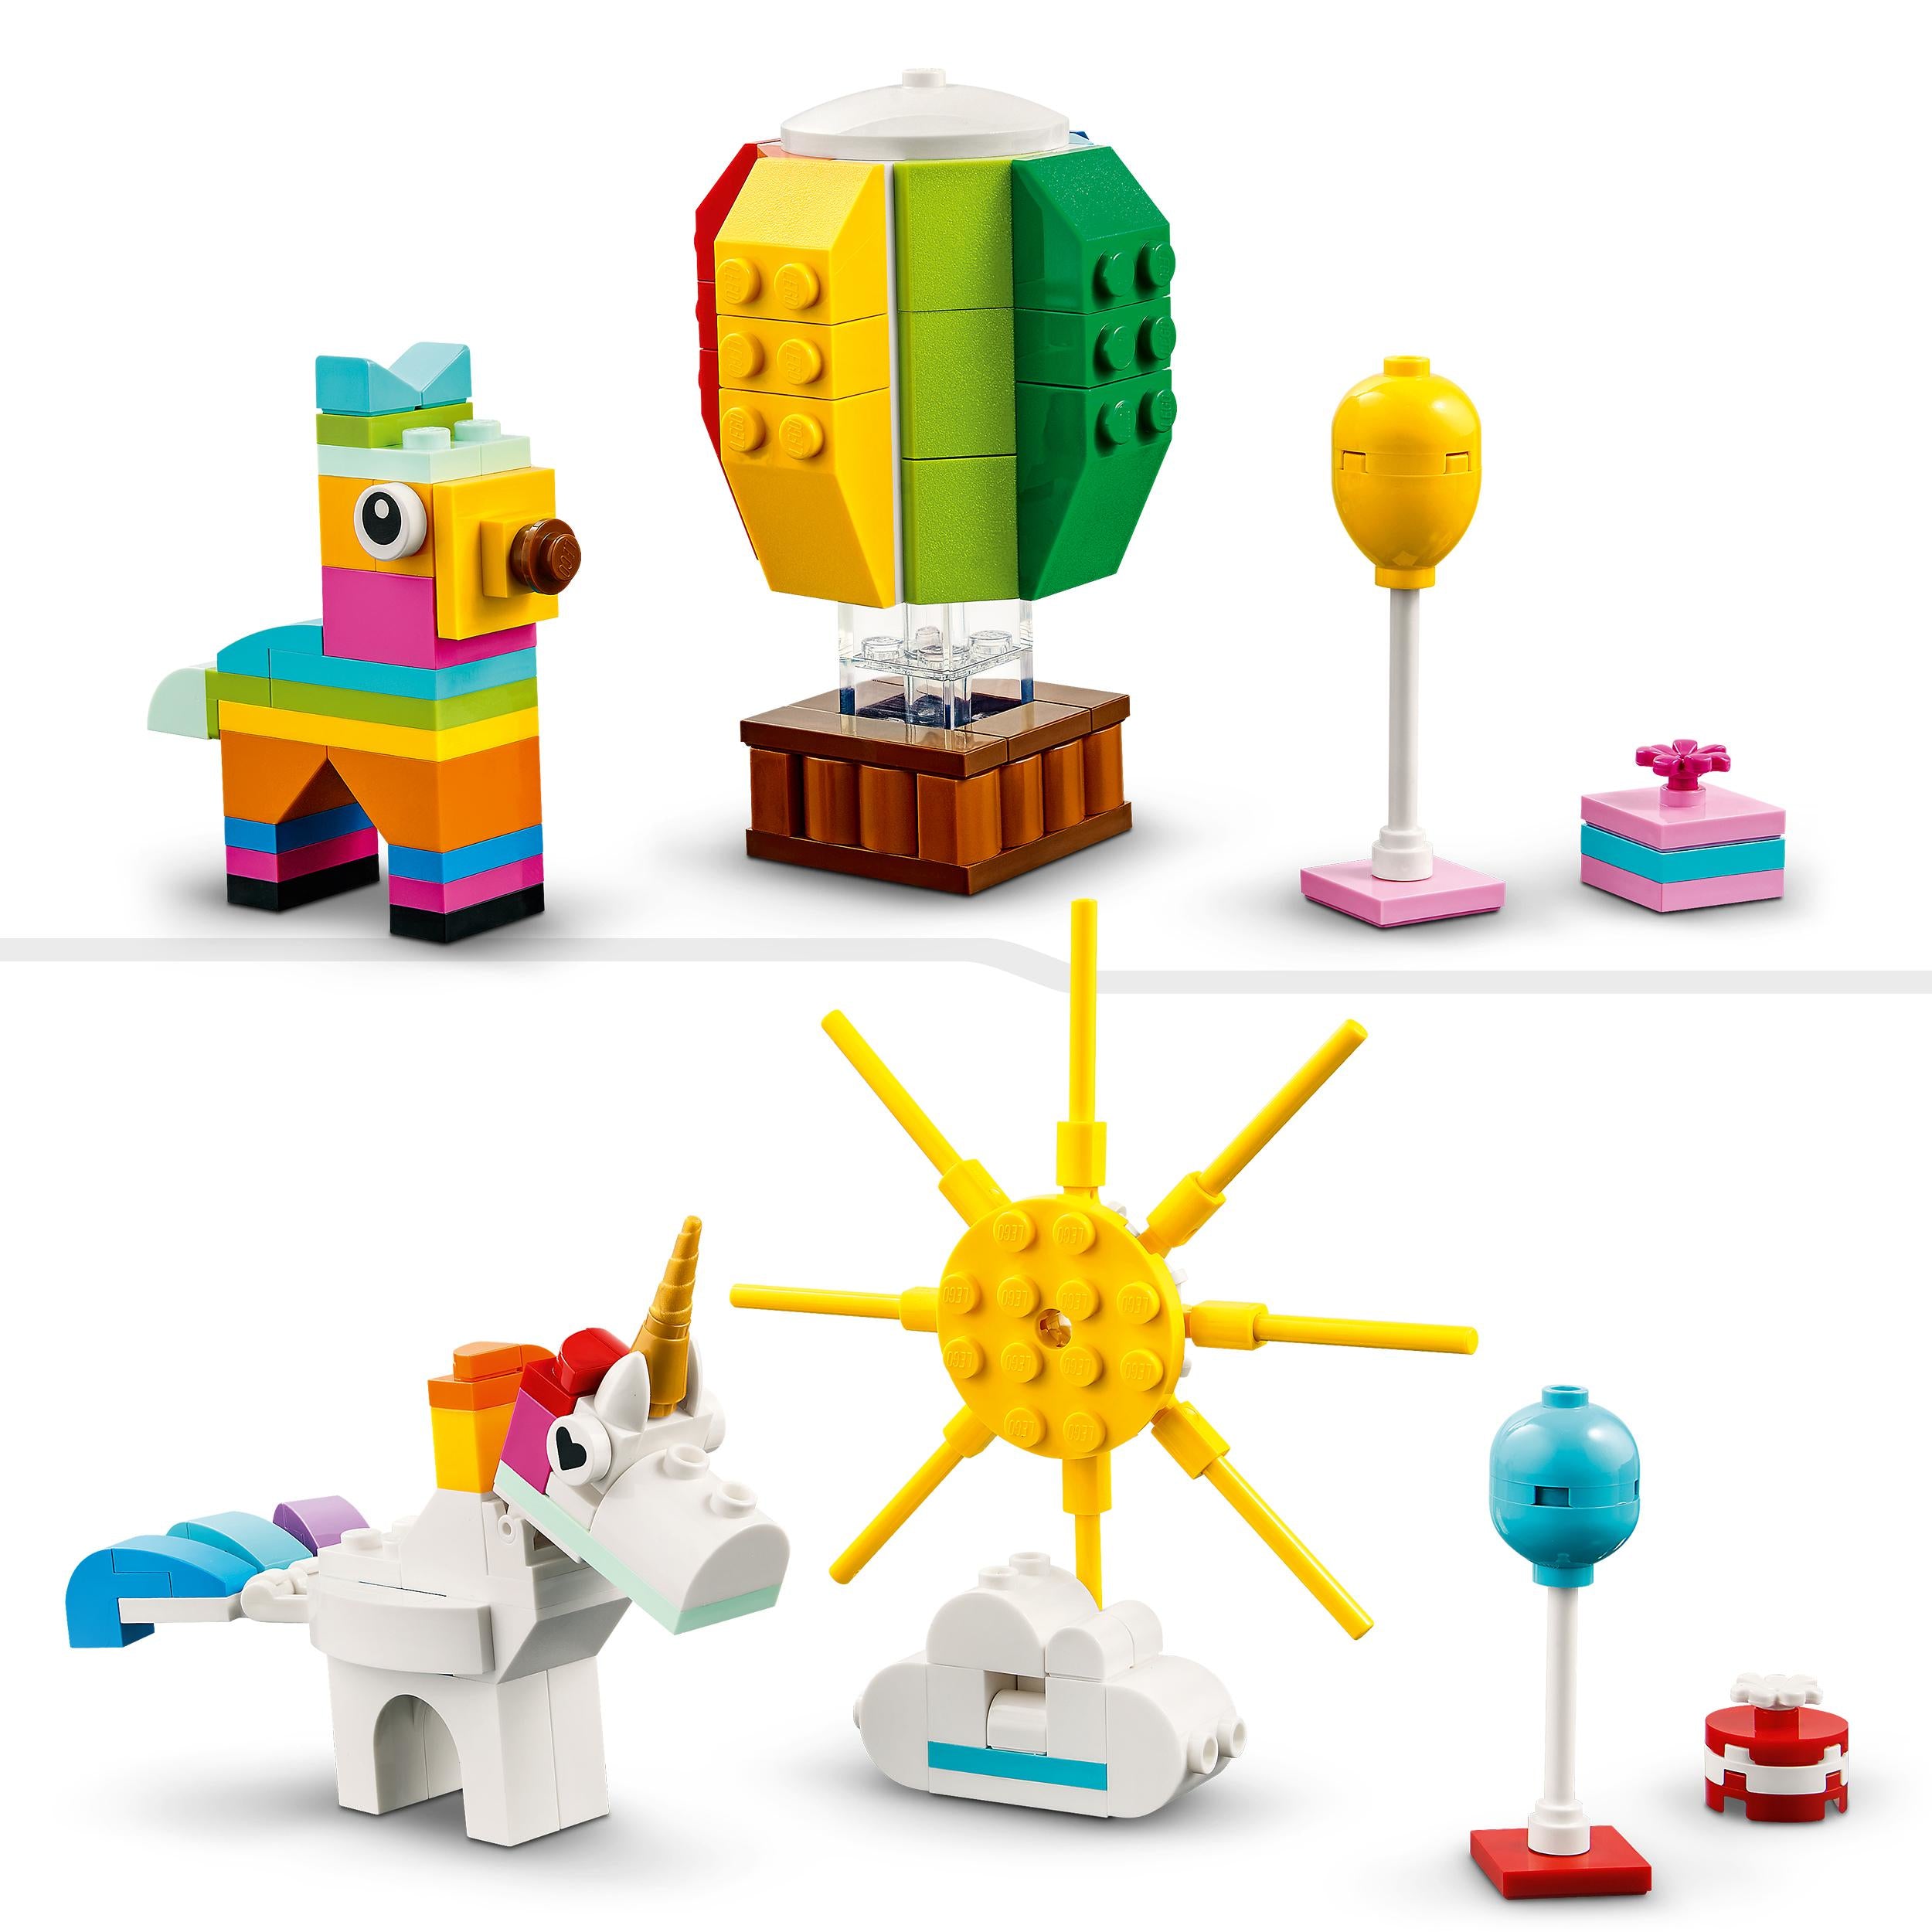 11029 - Lego - LEGO Classic - Party box creativa